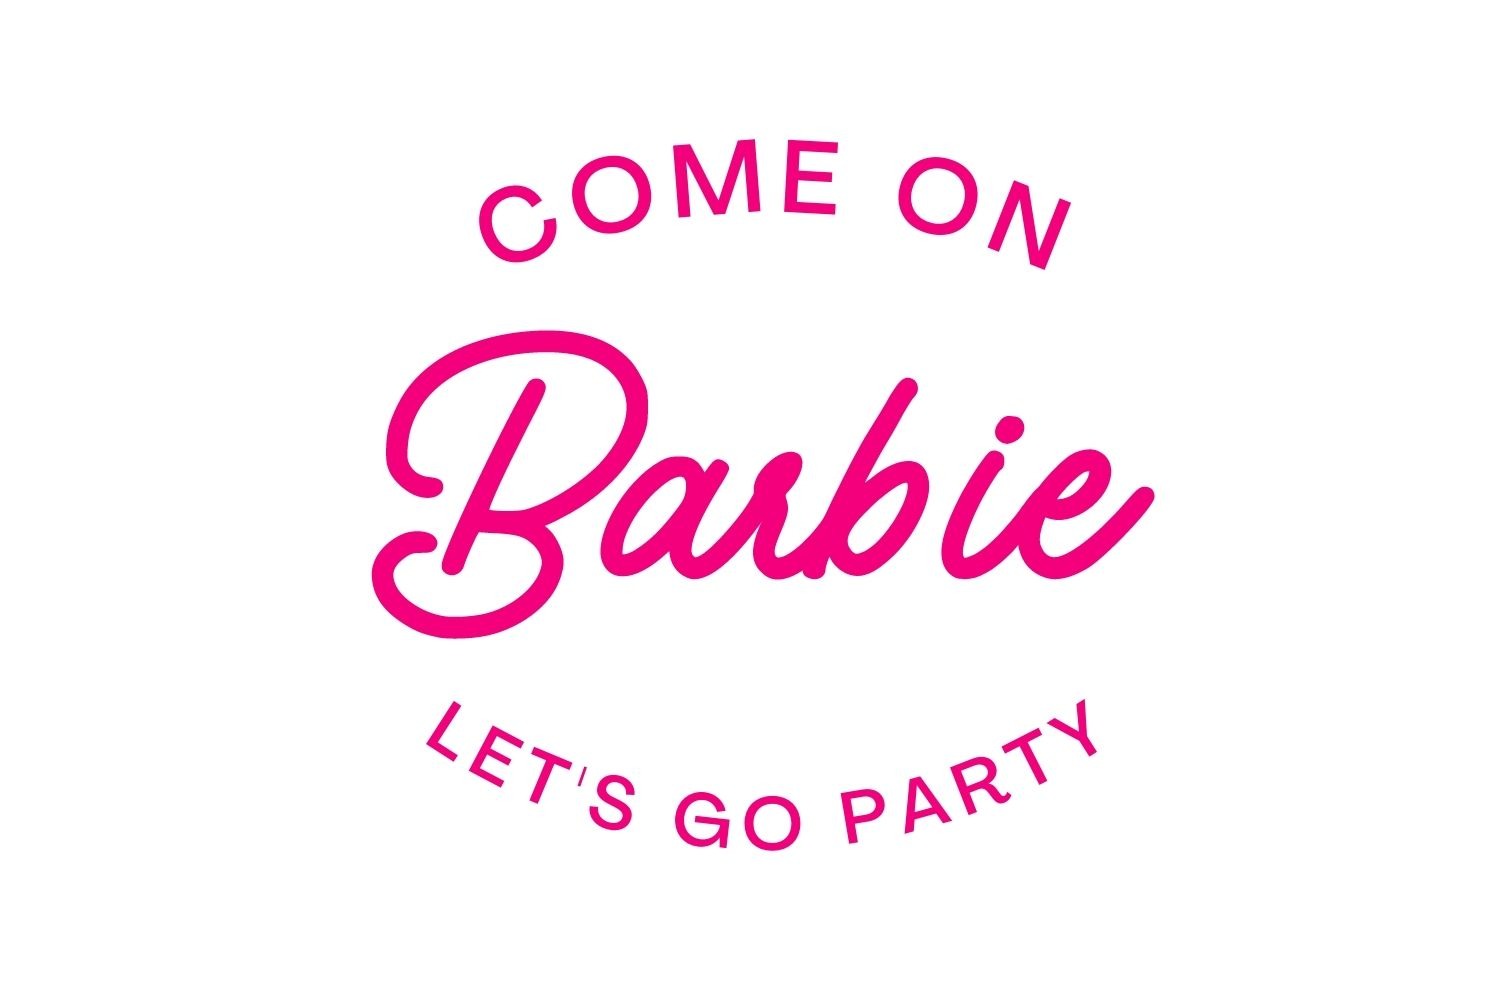 Come on barbie let's go party SVG